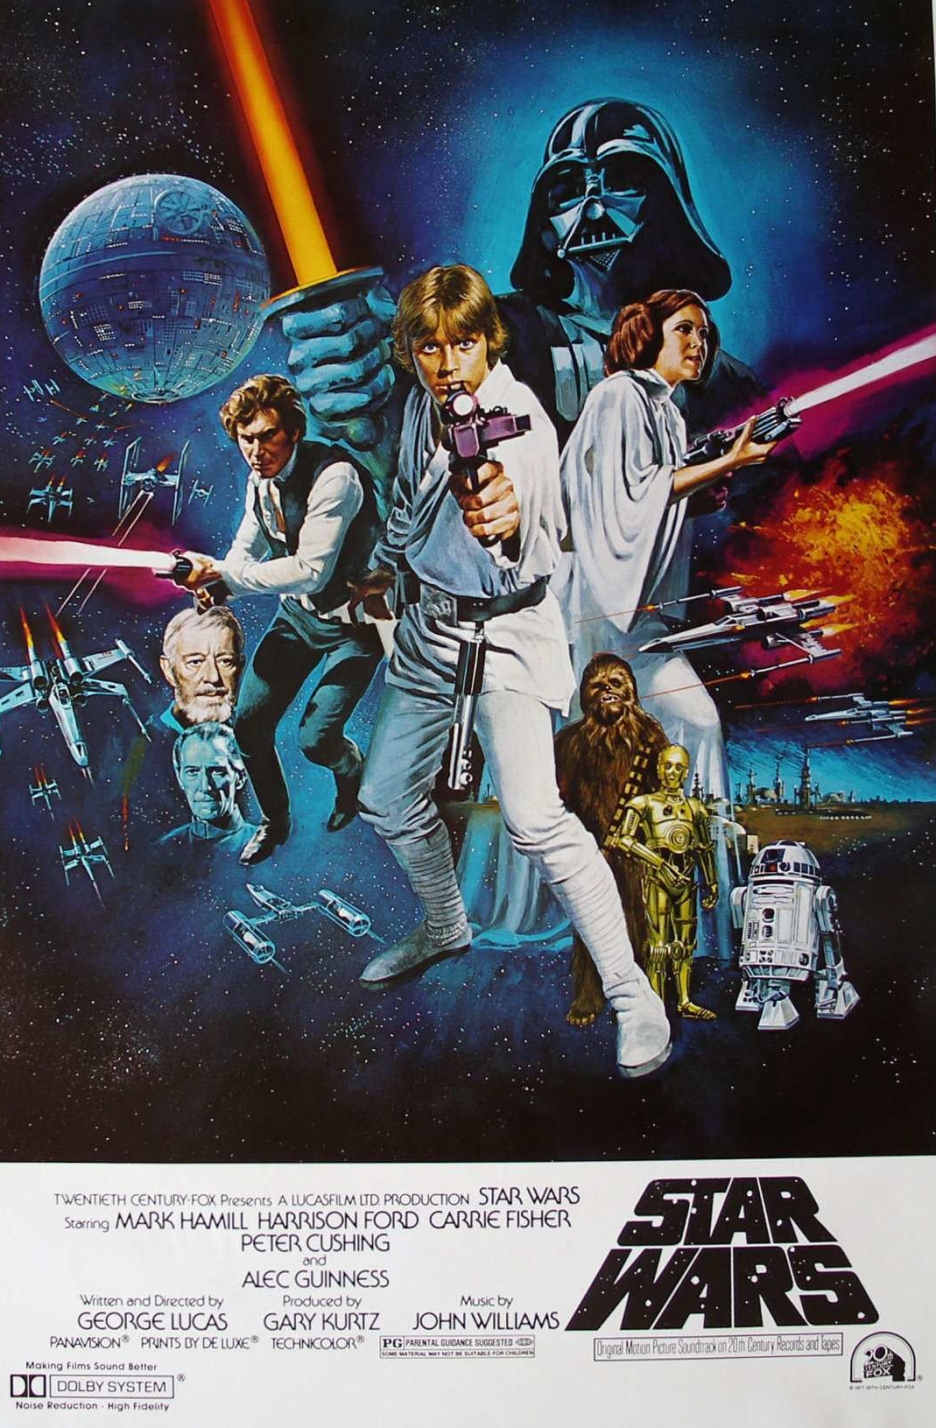 Star Wars films – A Look Back at All Six Movies!